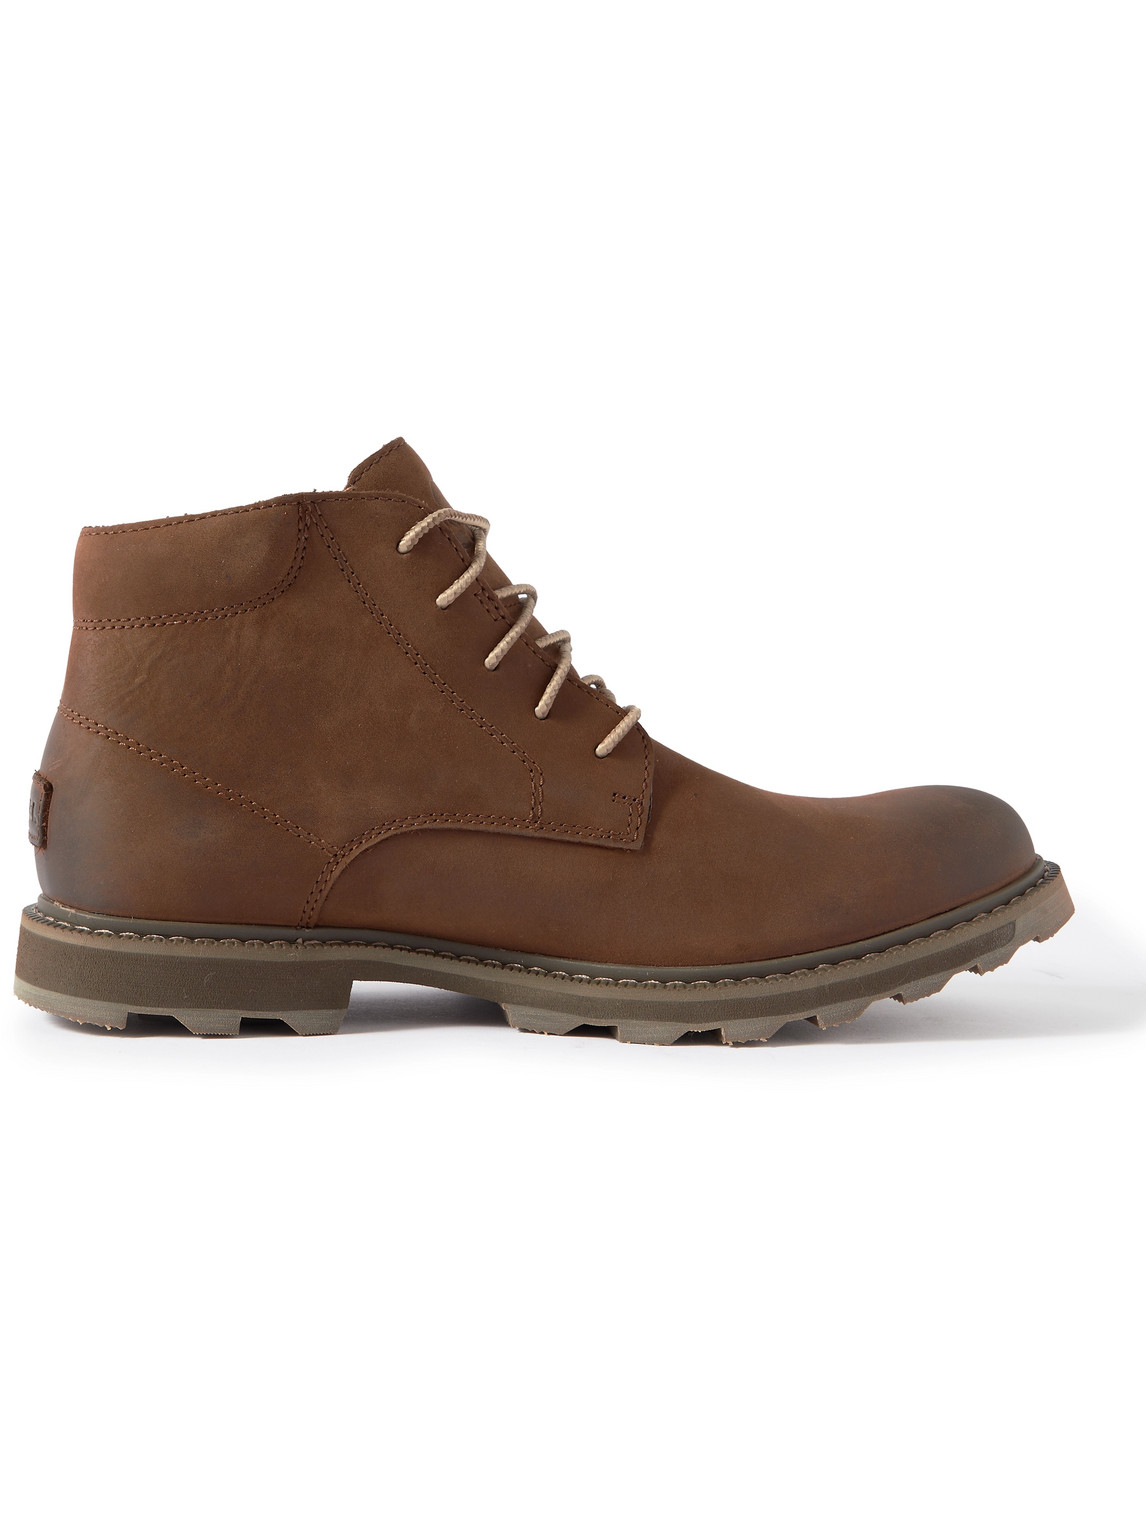 Sorel - Madson™ II Leather Chukka Boots - Men - Brown - US 11 von Sorel